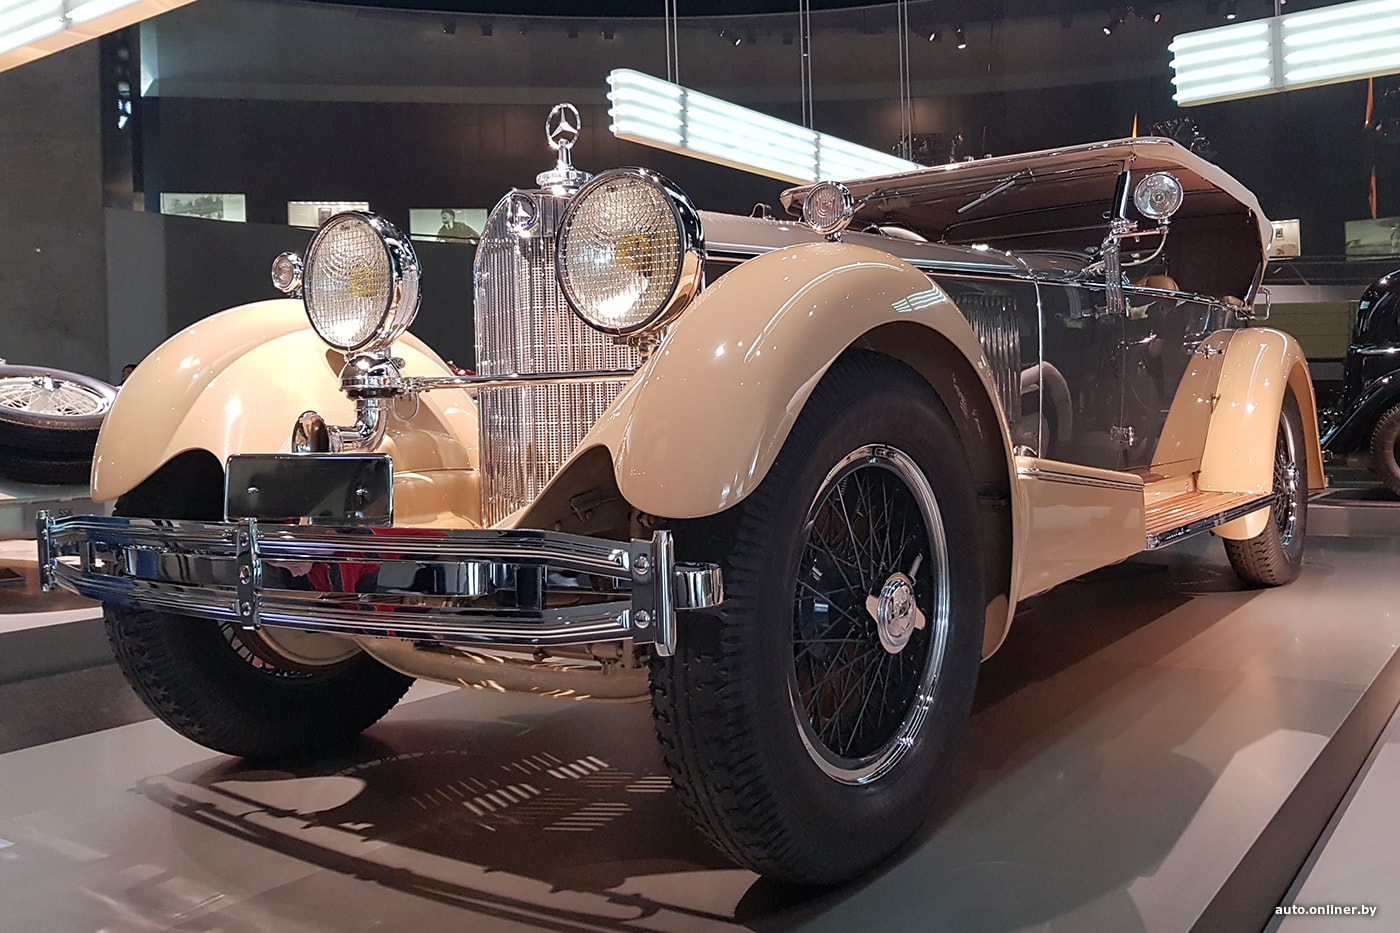 Mercedes-Benz Typ s 1927